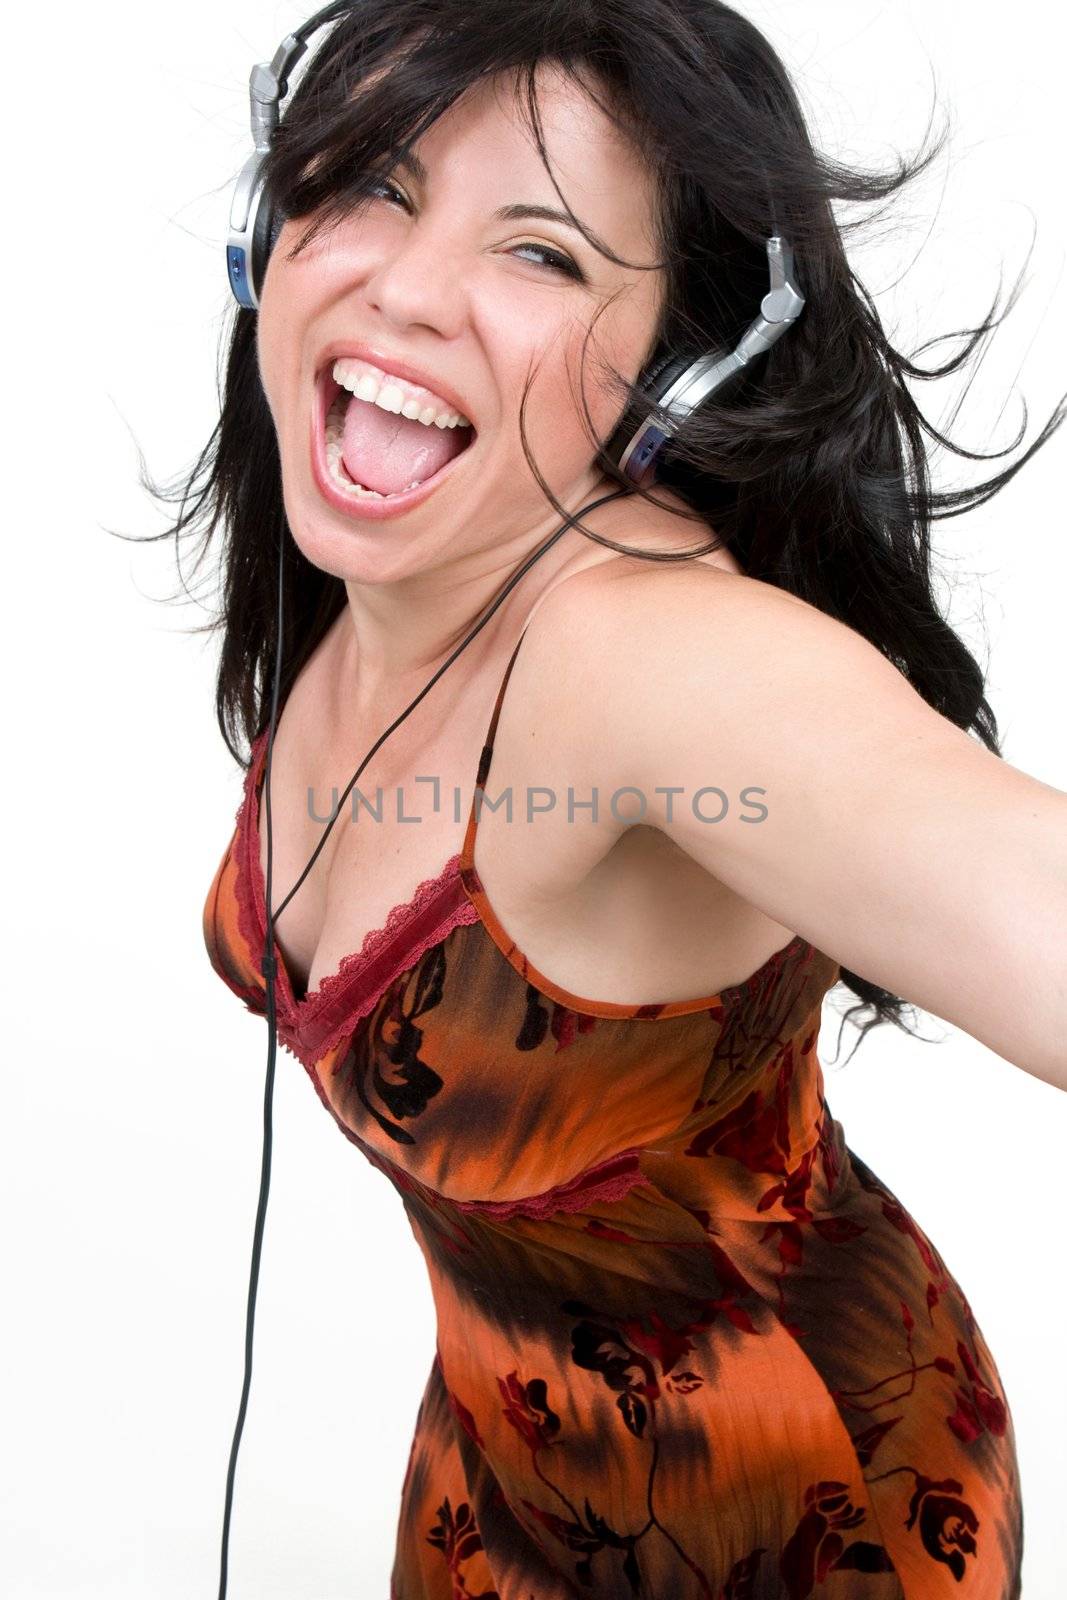 Charismatic woman dancing and enjoying upbeat music